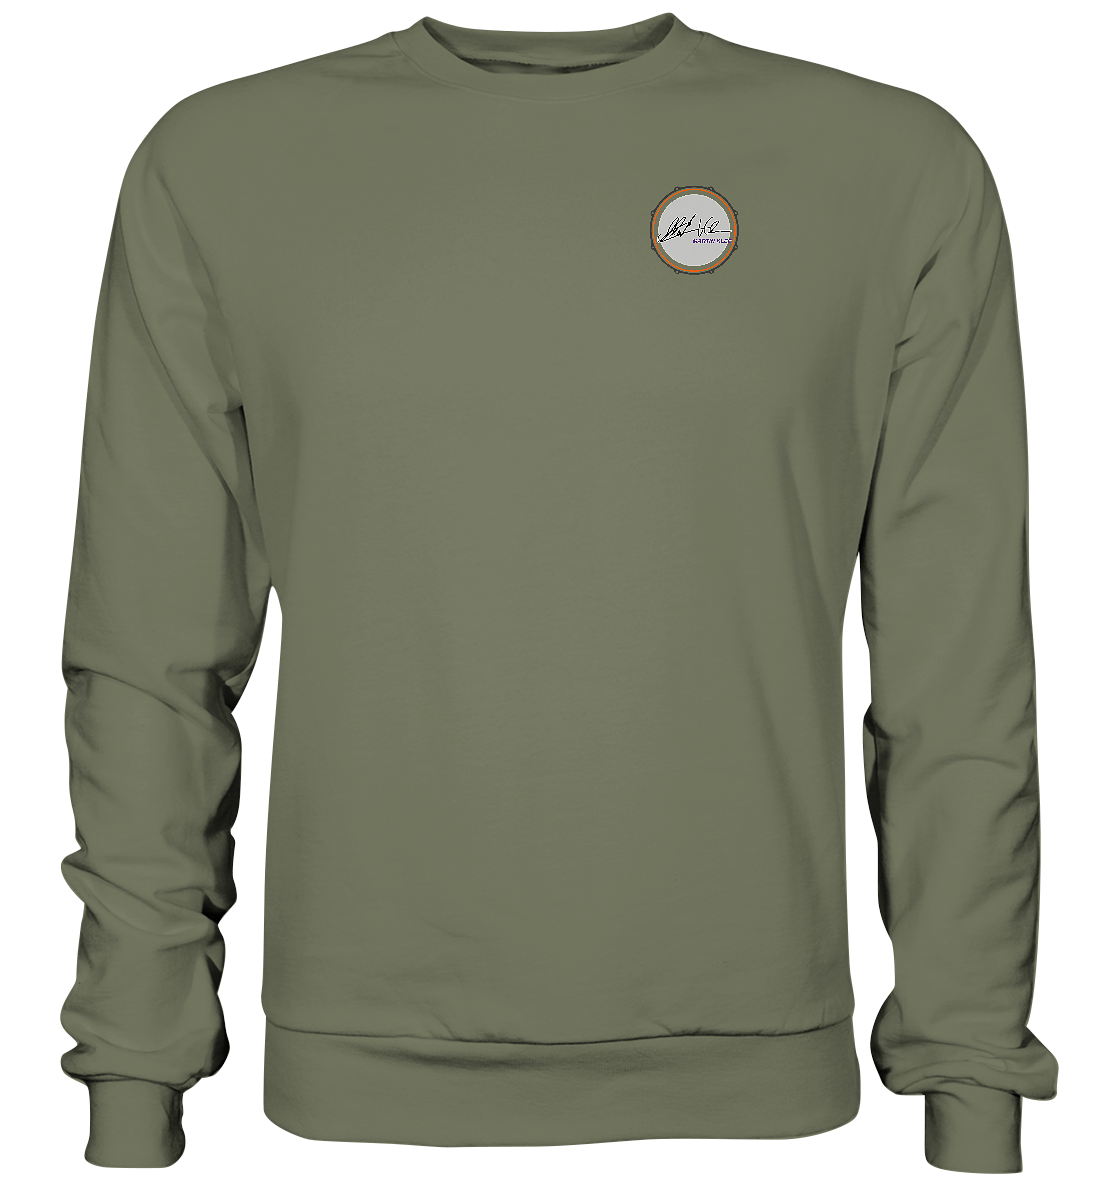 founder - sweatshirt | various colors